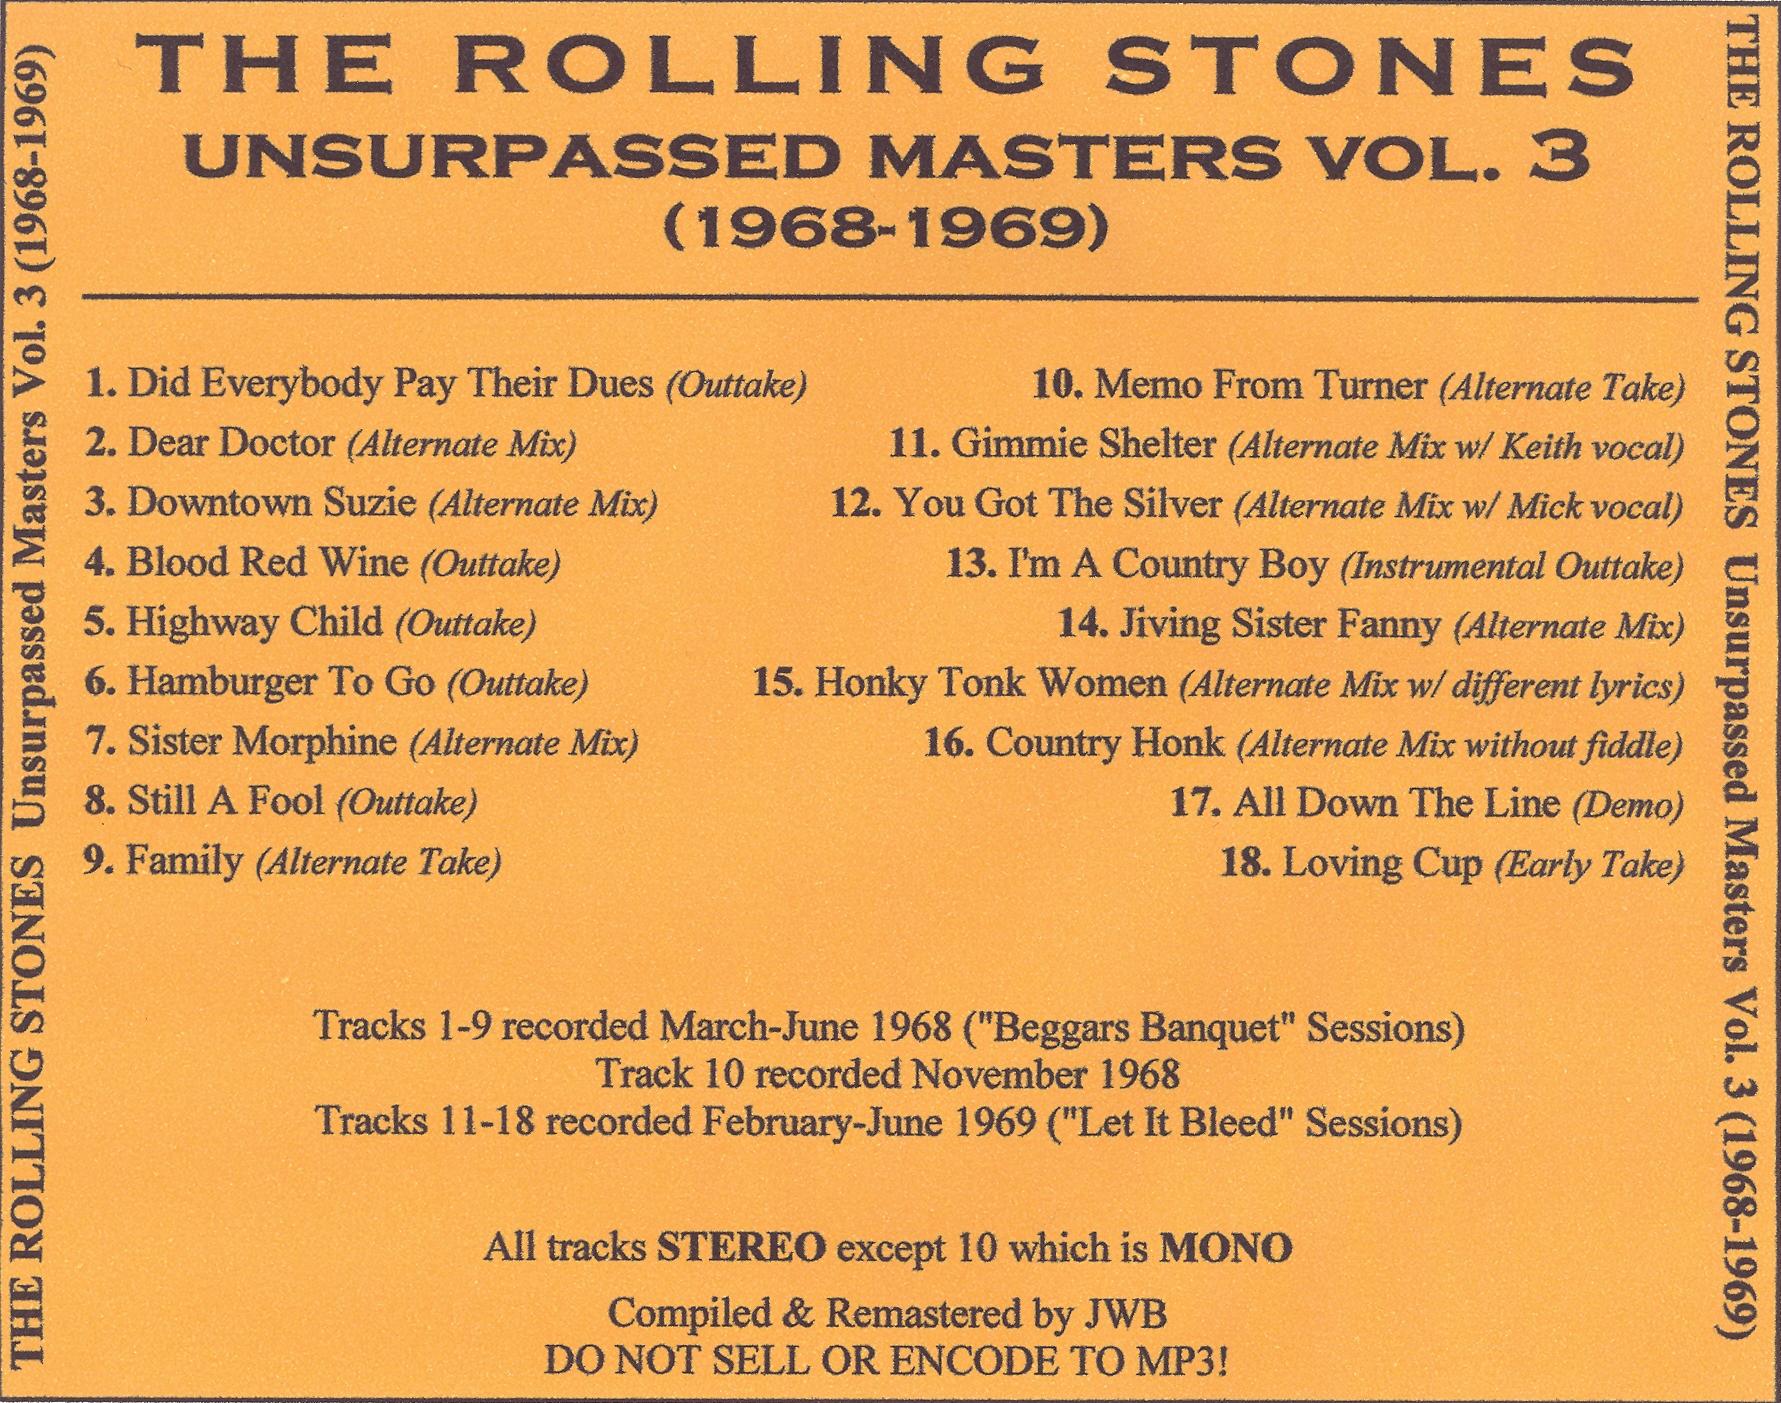 RollingStones1968-1969UnsurpassedMastersVol3 (2).jpg